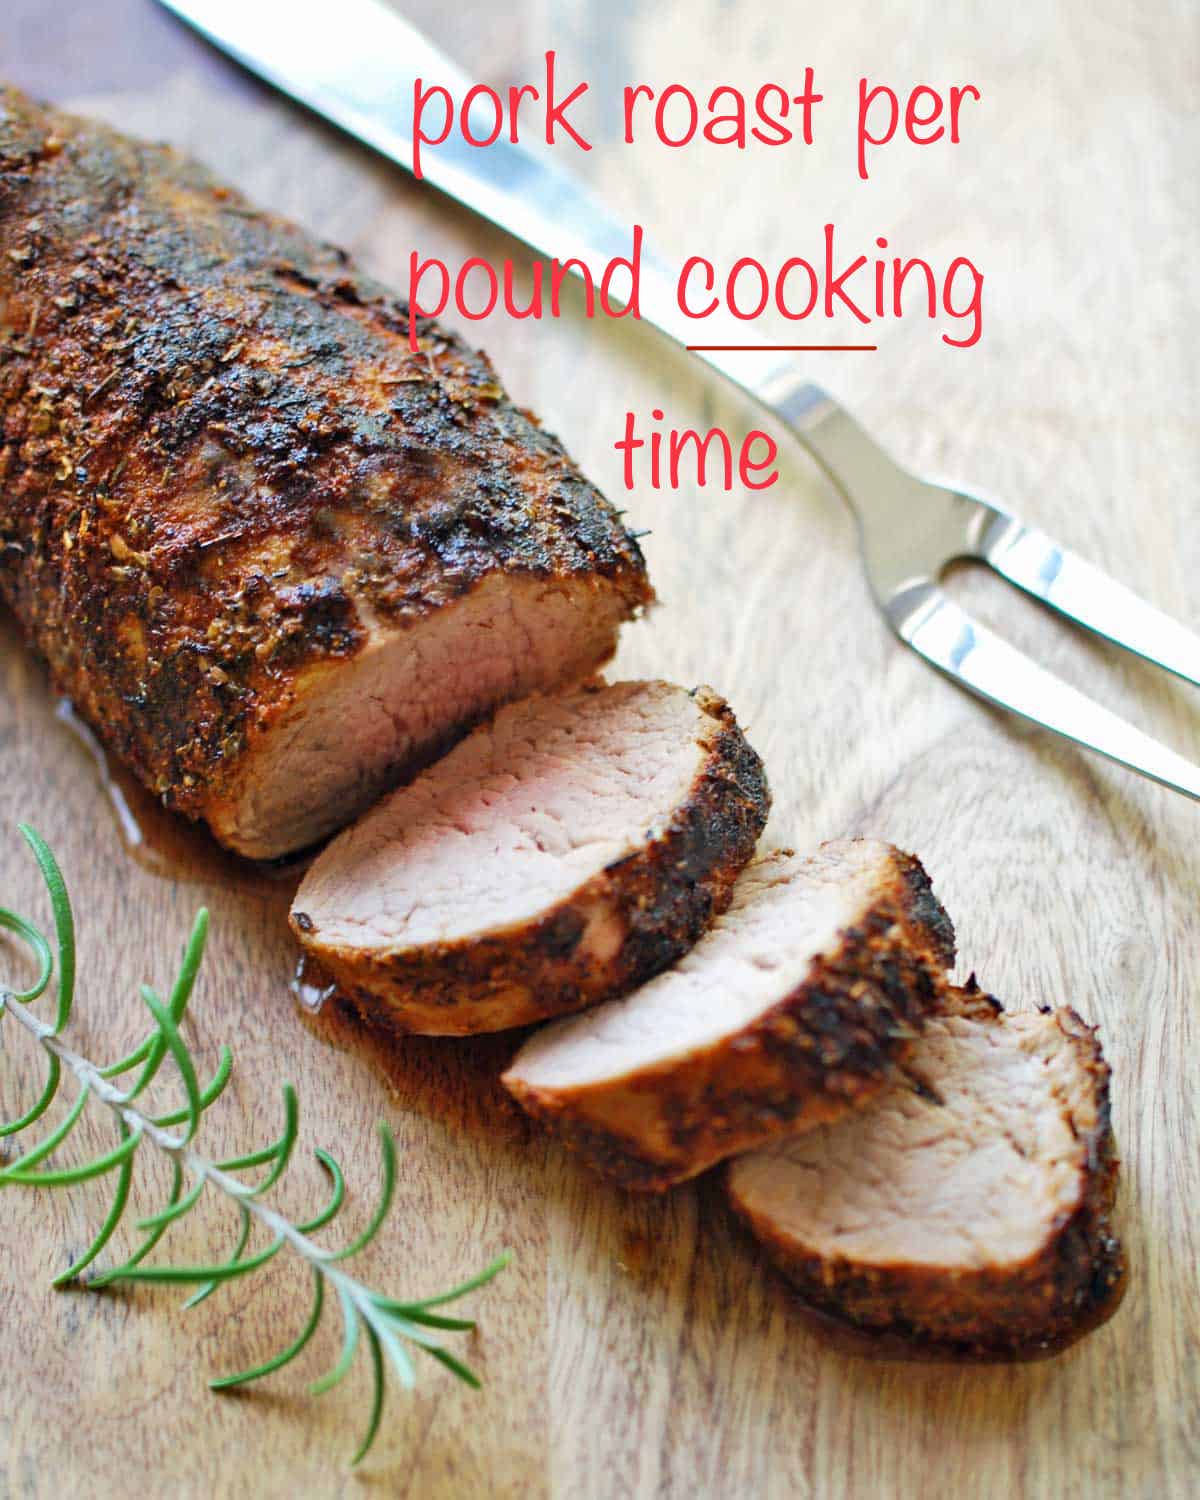 pork roast per pound cooking time